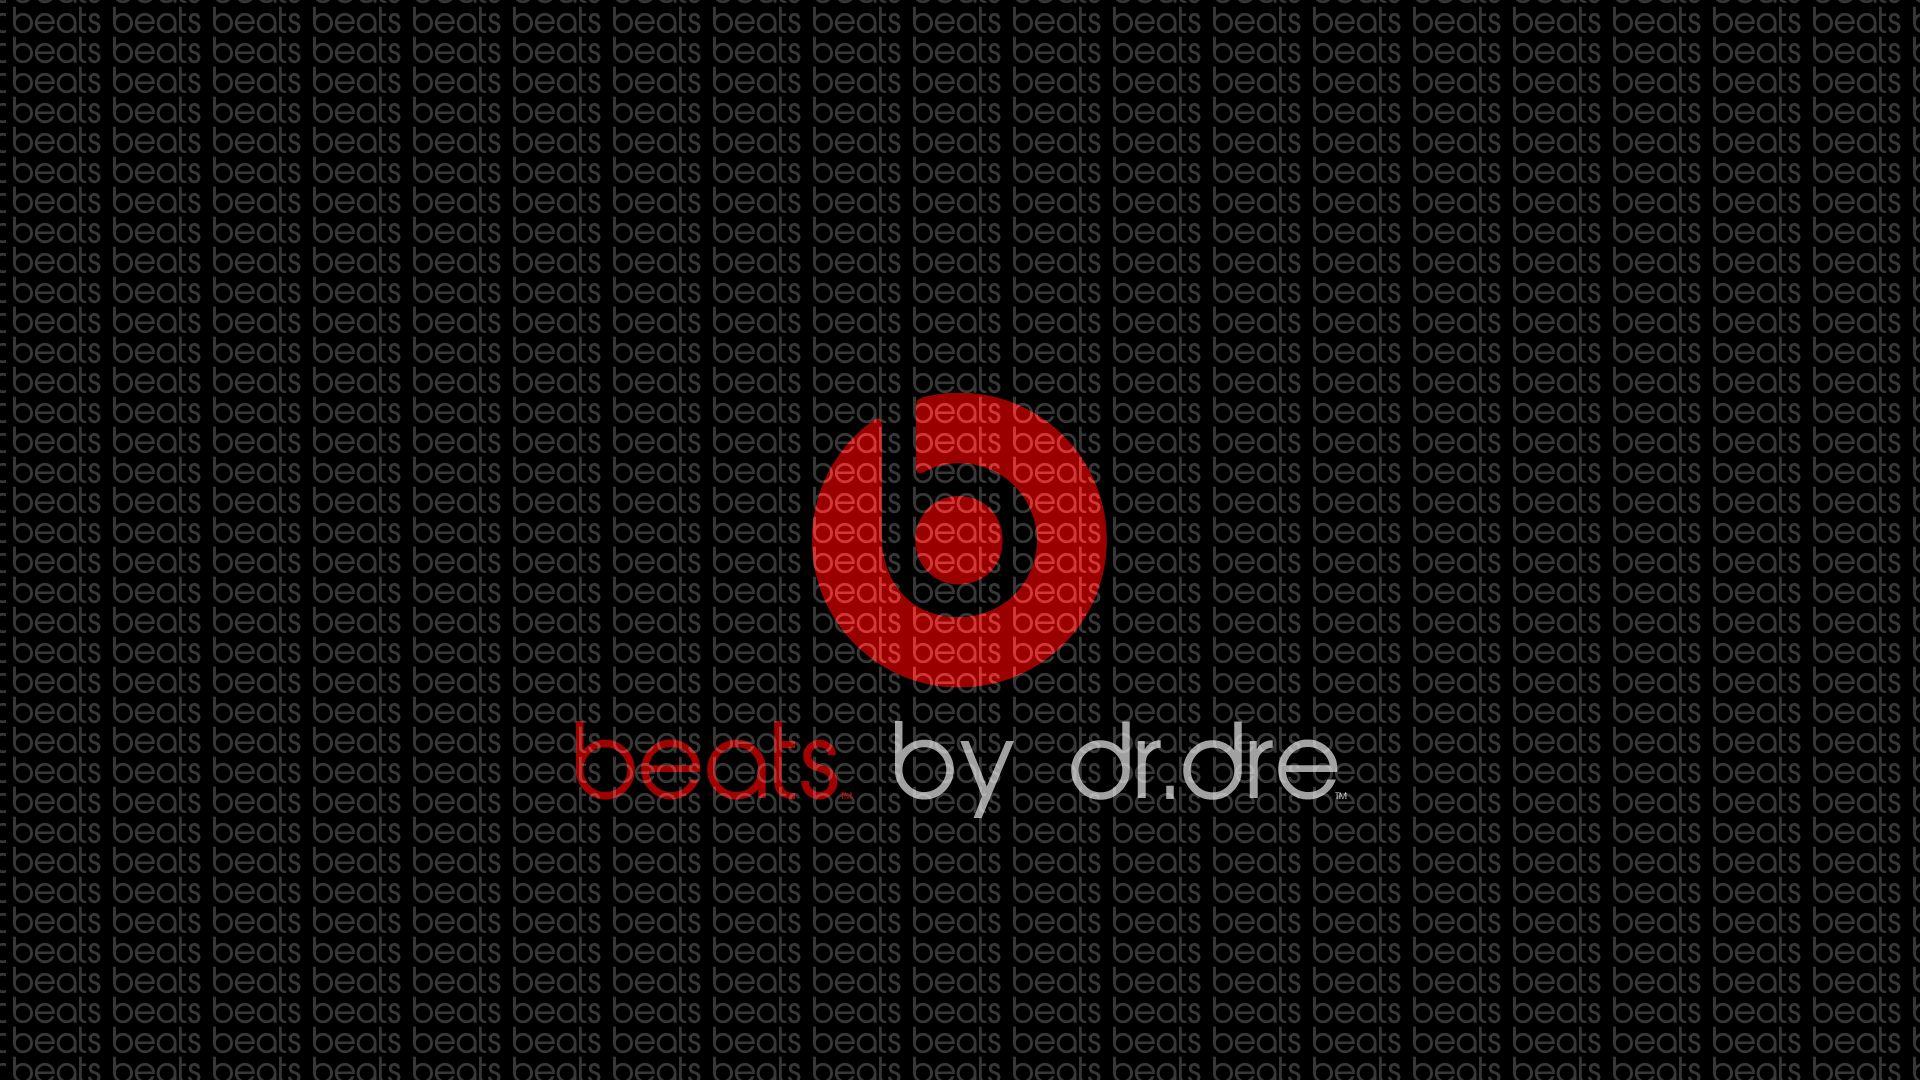 Cool Beat Logo - Beats by Dre Logo wallpaper | 1920x1080 | #27597